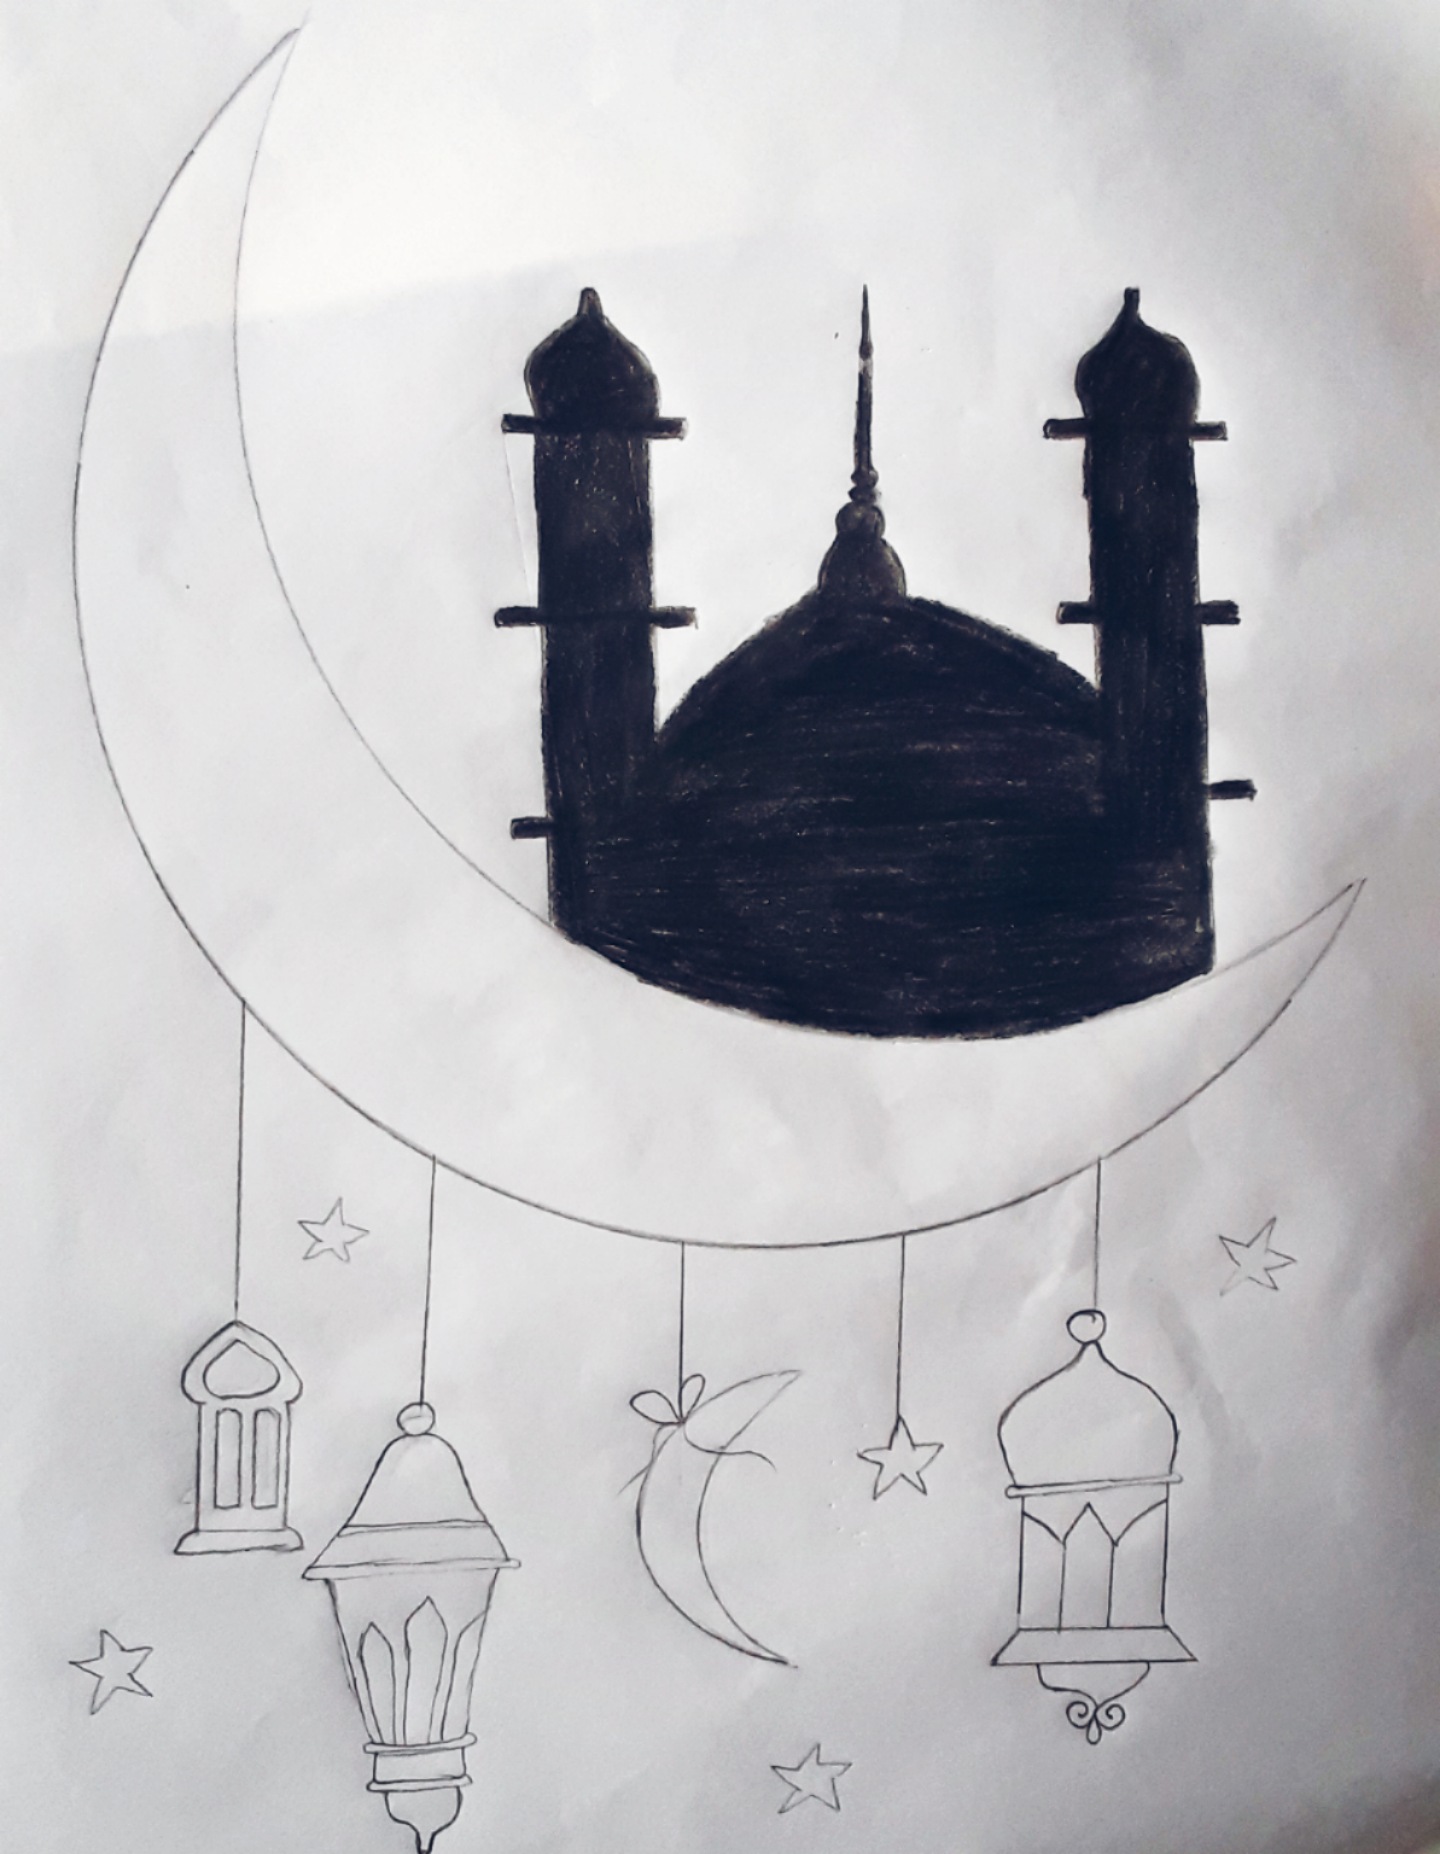 Free Happy Ramadan Drawing - Download in Illustrator, PSD, EPS, SVG, JPG,  PNG | Template.net